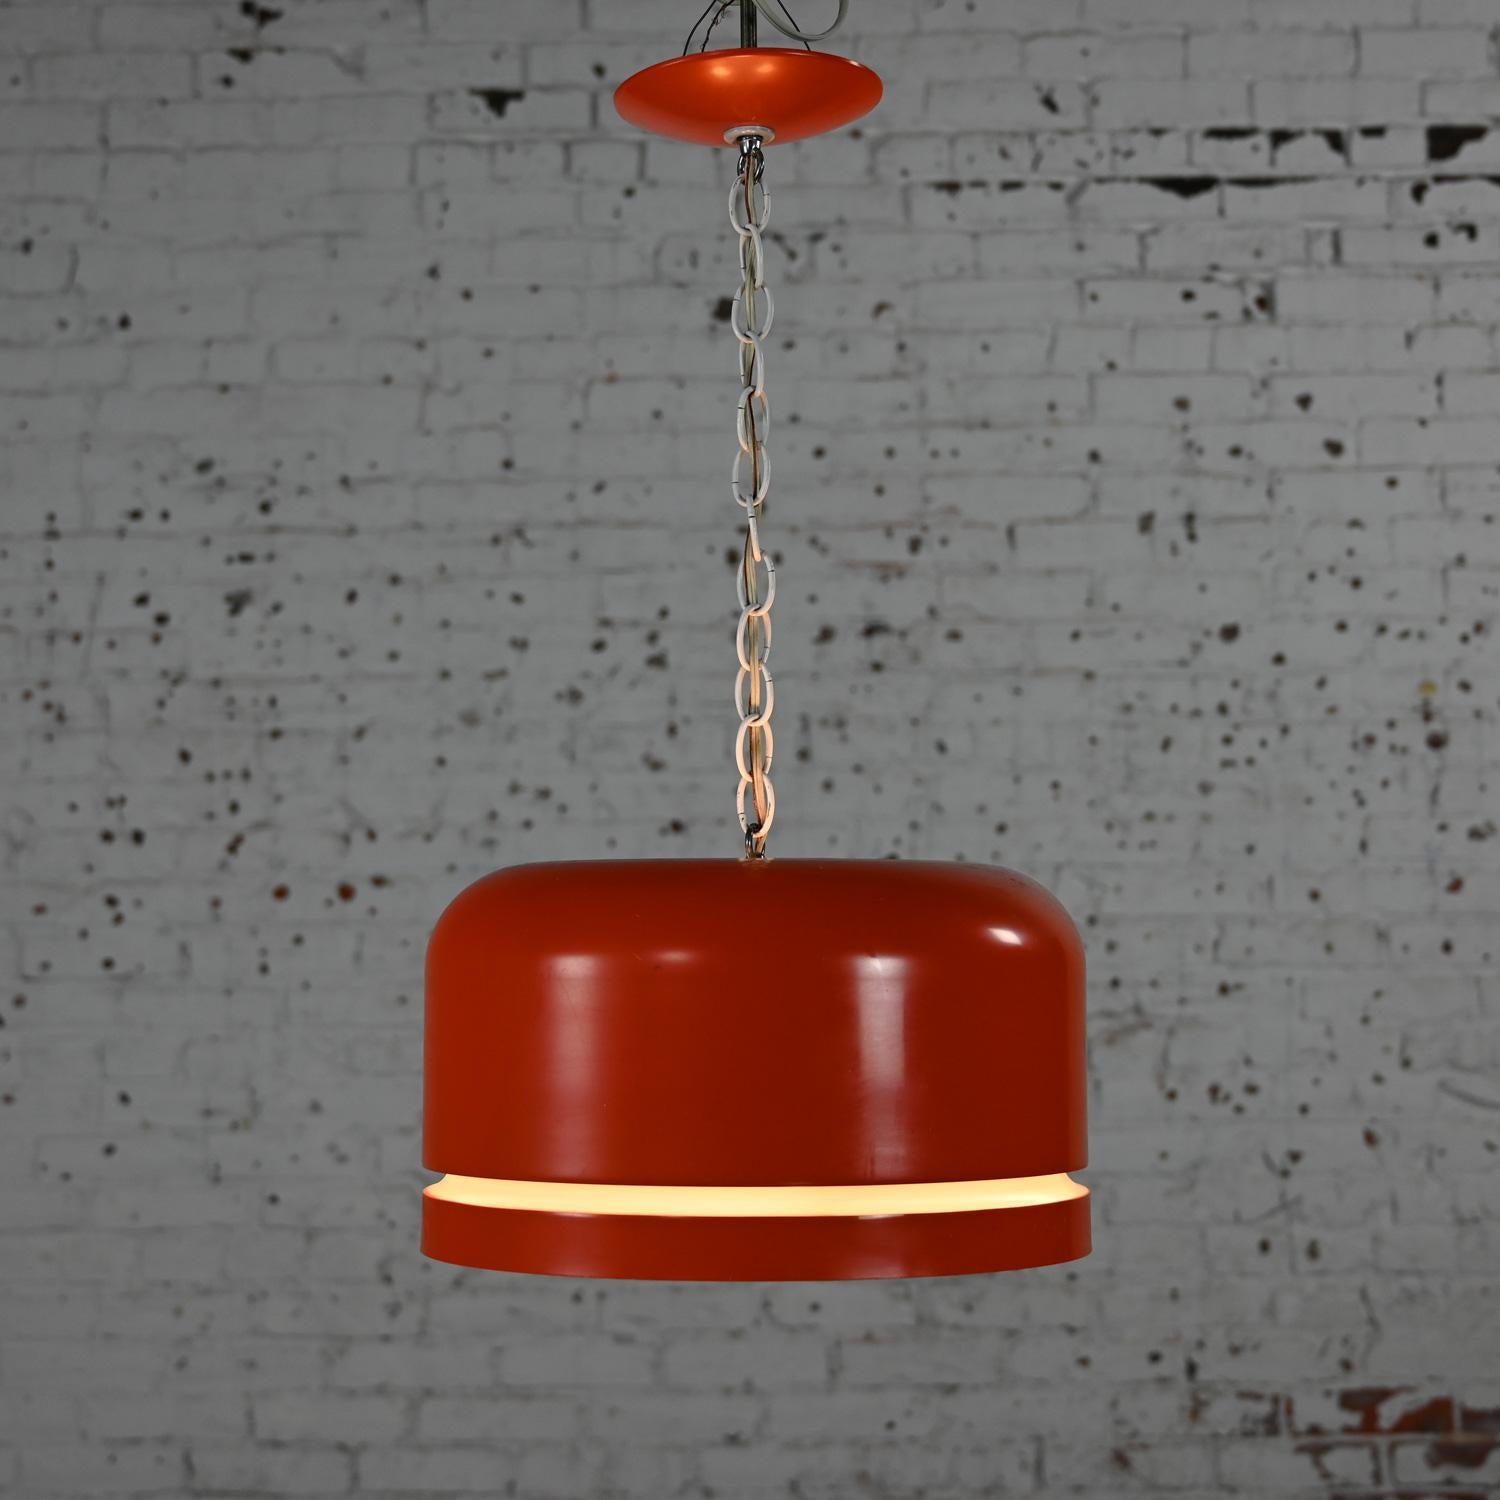 Mid Century Modern Orange Dome Pendant Hanging Light Fixture by Lightolier For Sale 3